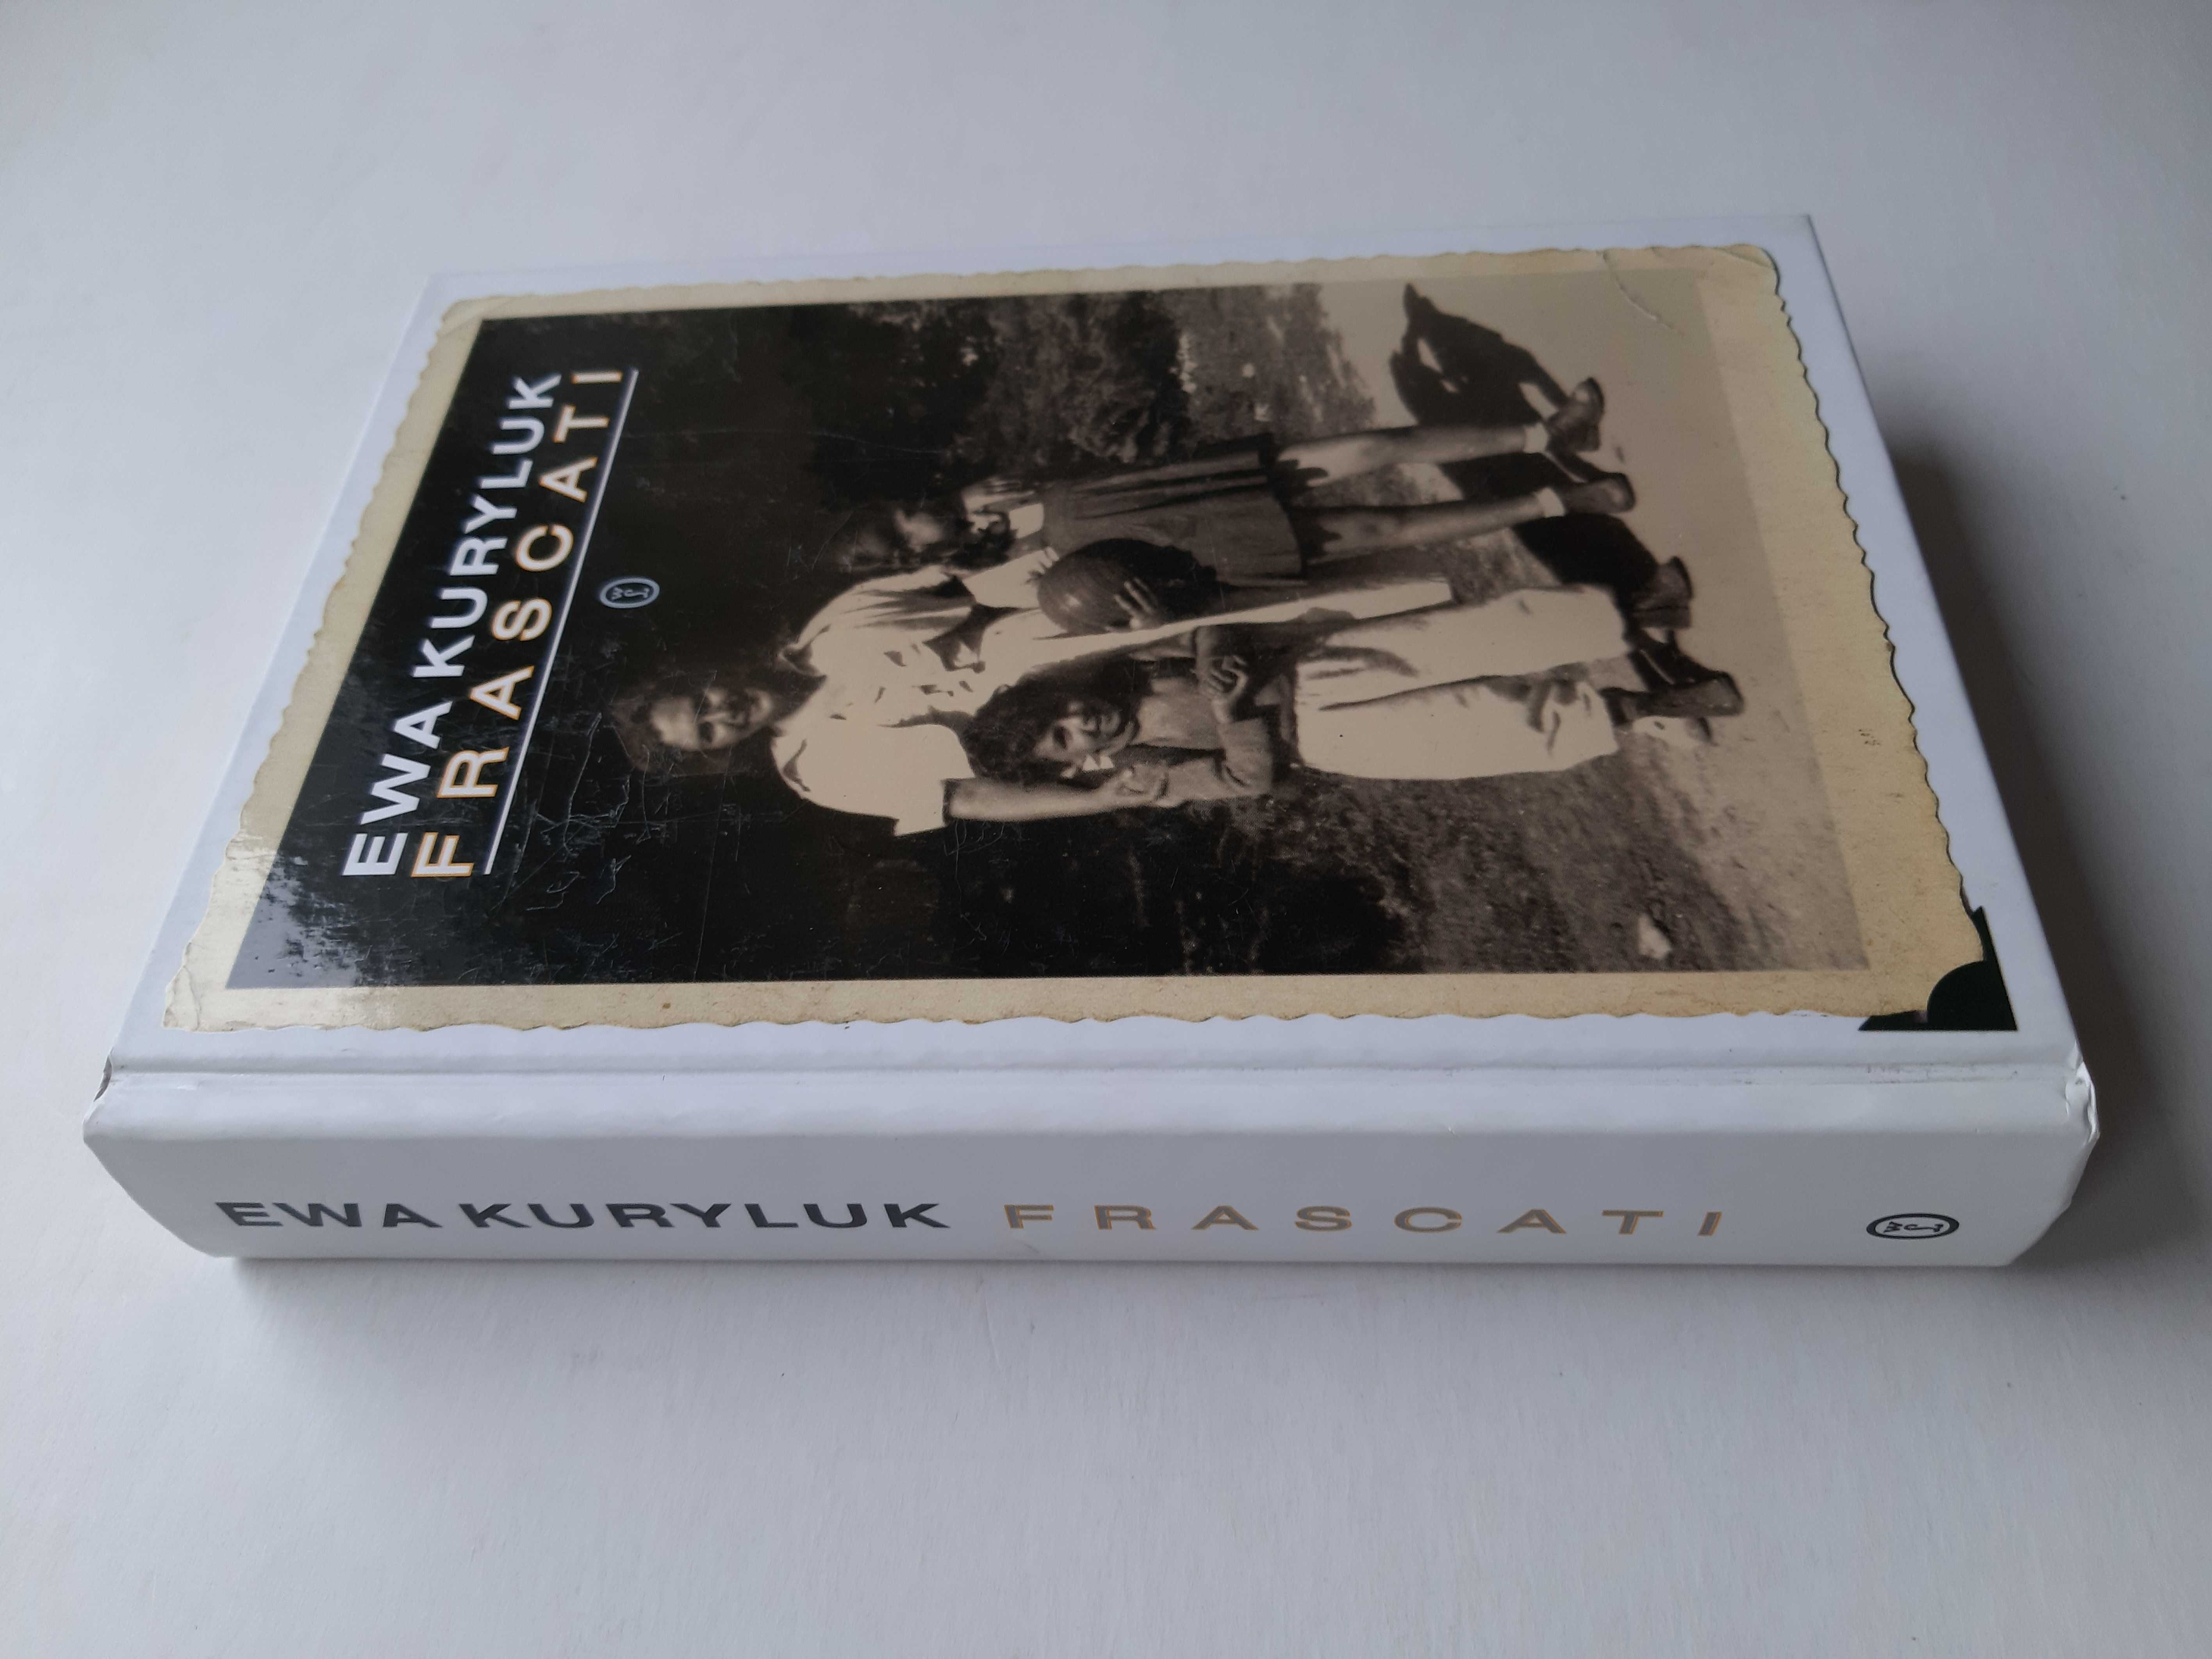 Frascati – Ewa Kuryluk